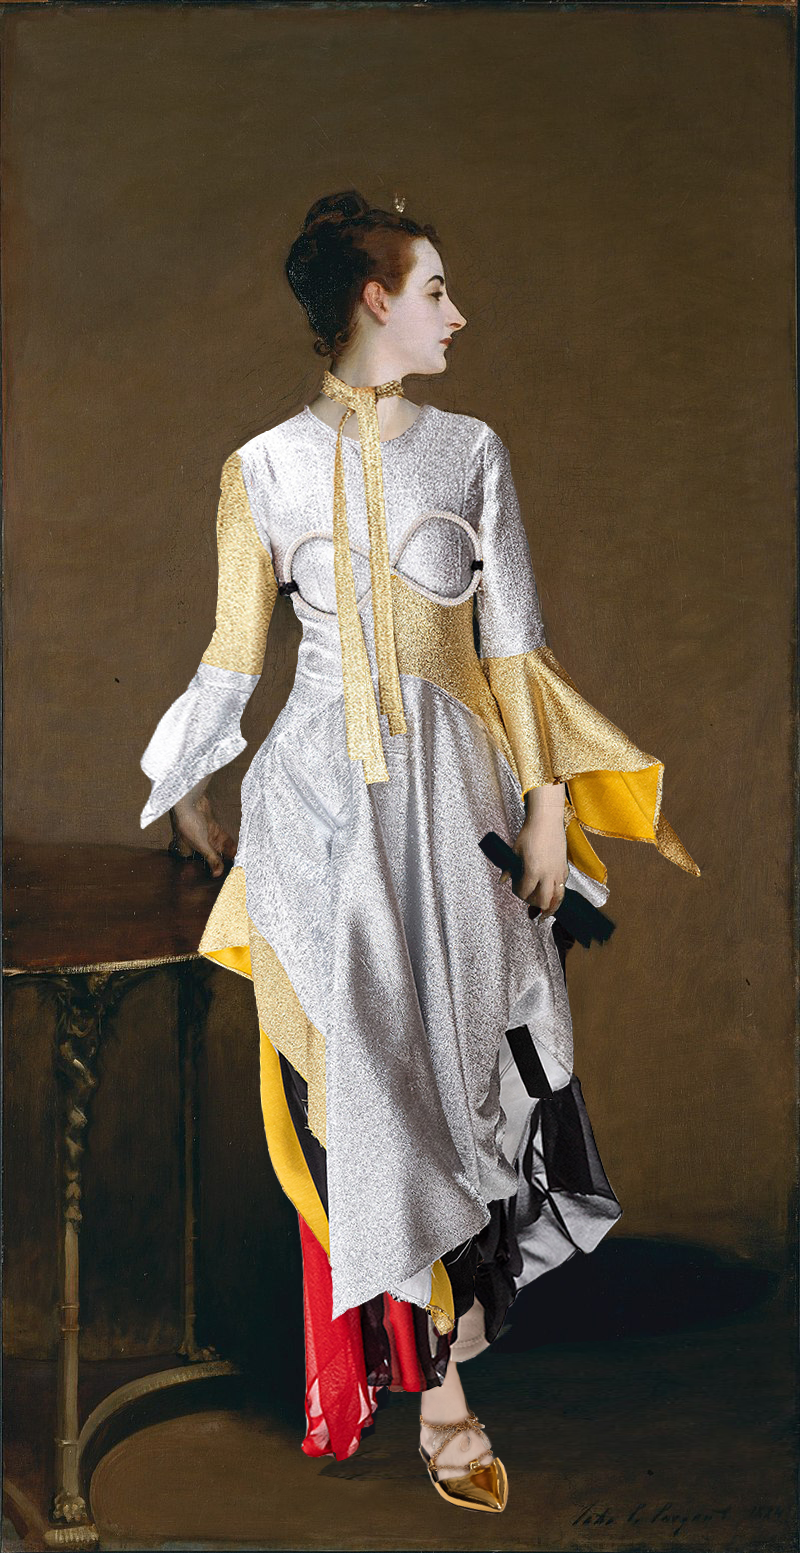  John Singer Sargent, Portrait of Madame X (in JW Anderson), 1883-84 